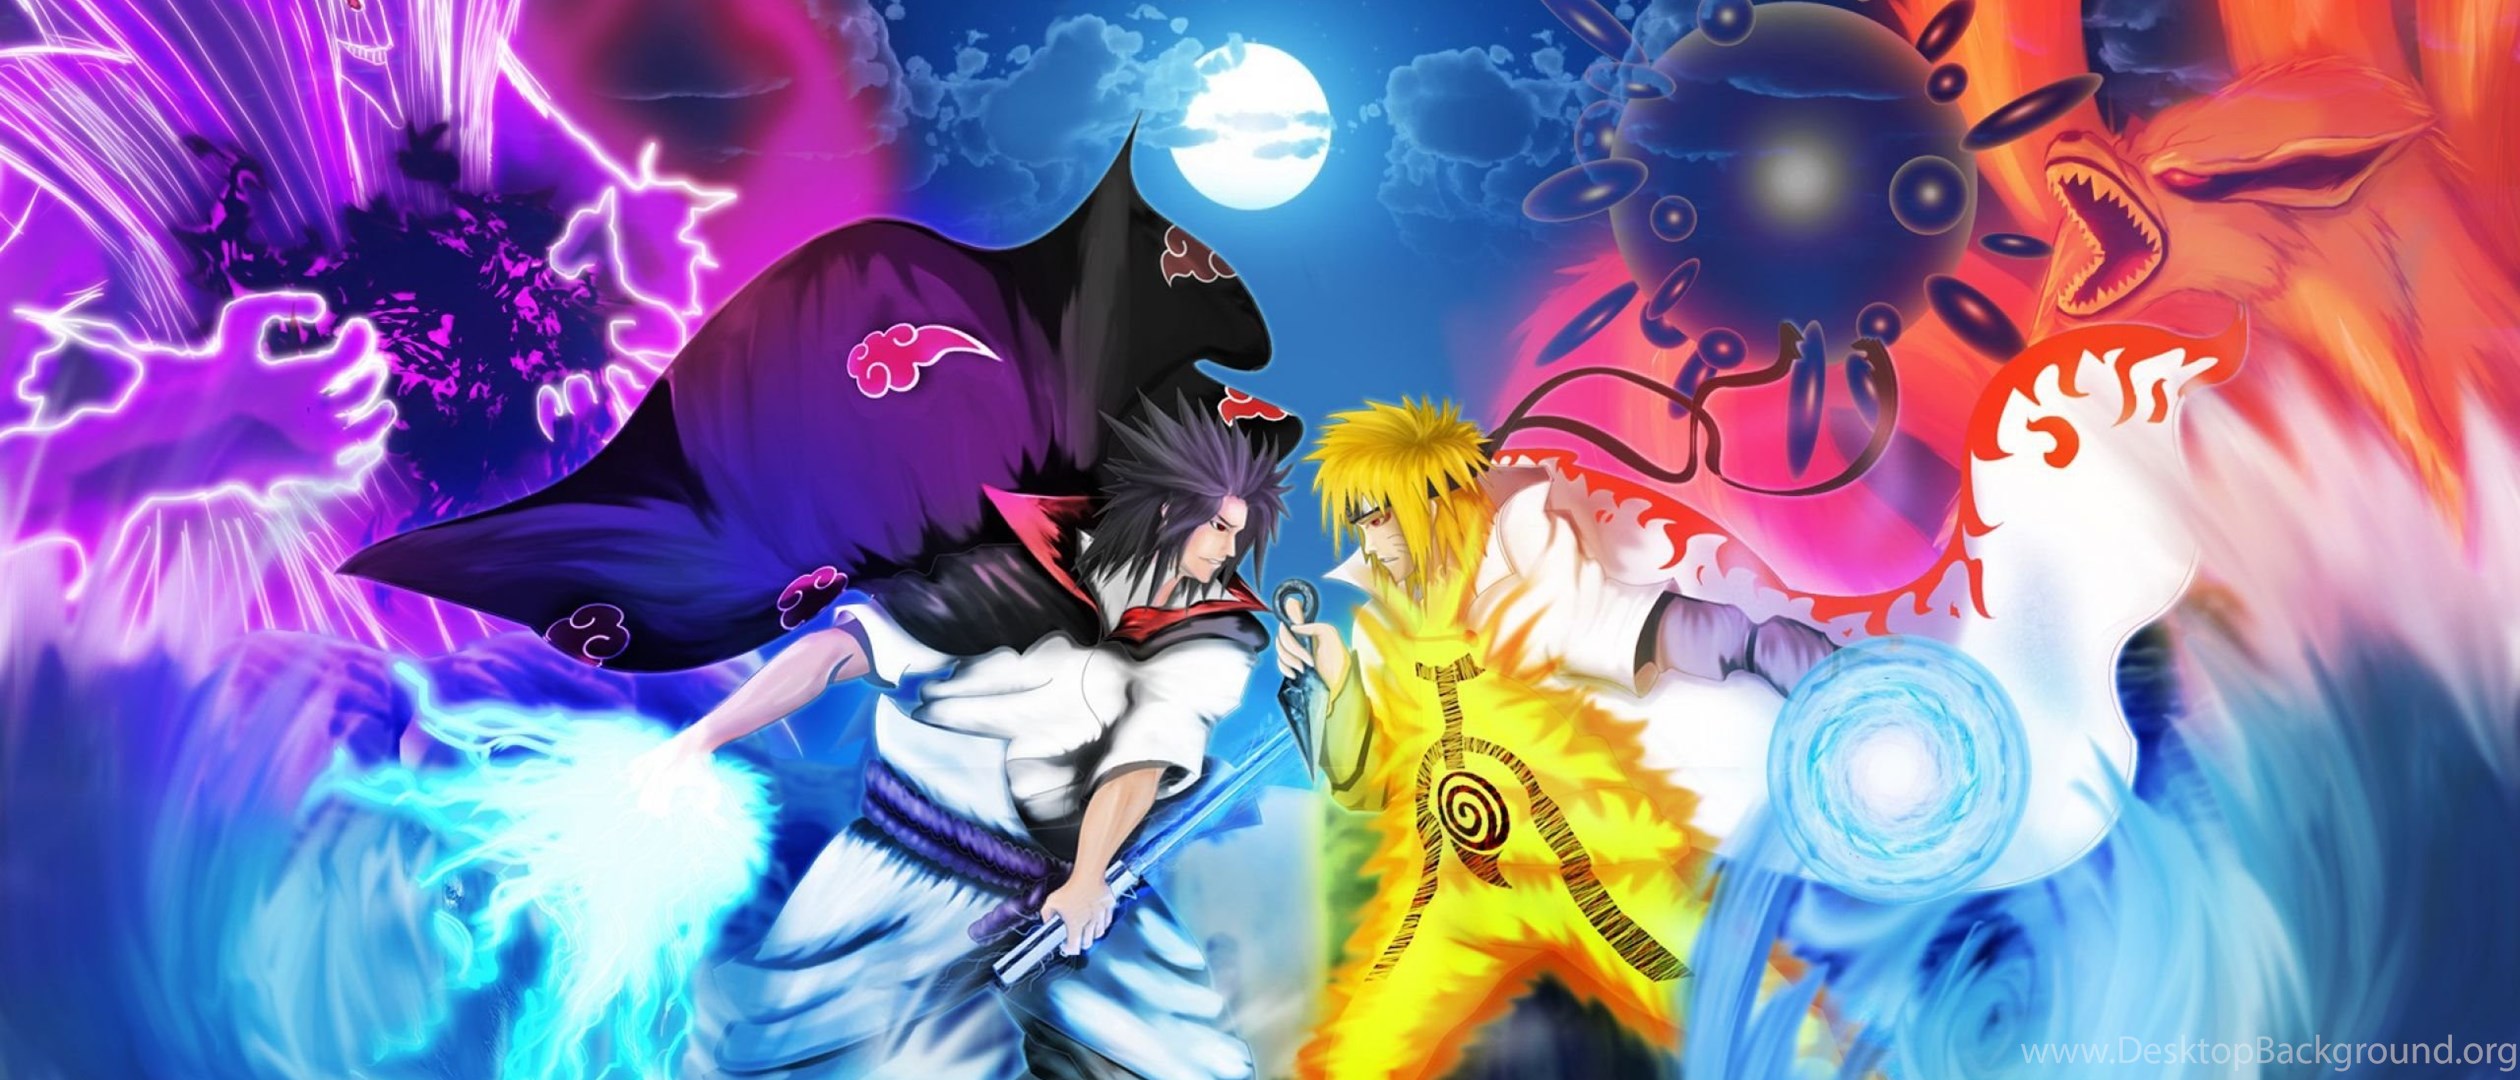 Download Naruto Vs Sasuke Wallpapers Free Widescreen Wide 21:9 2520x1080 De...